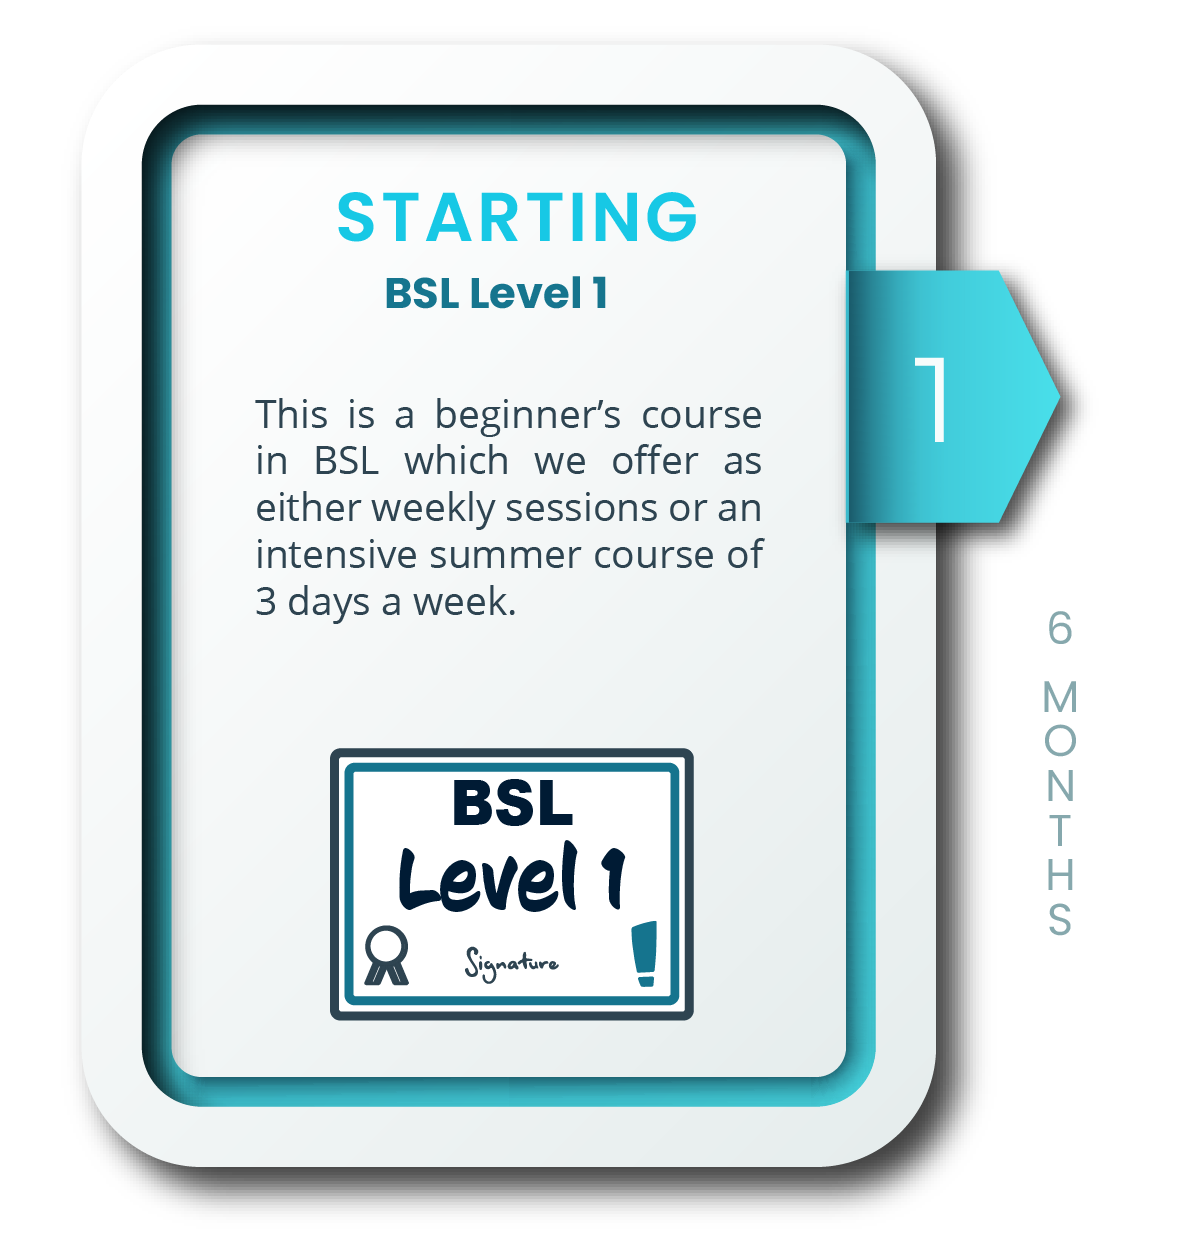 Starting - BSL Level 1